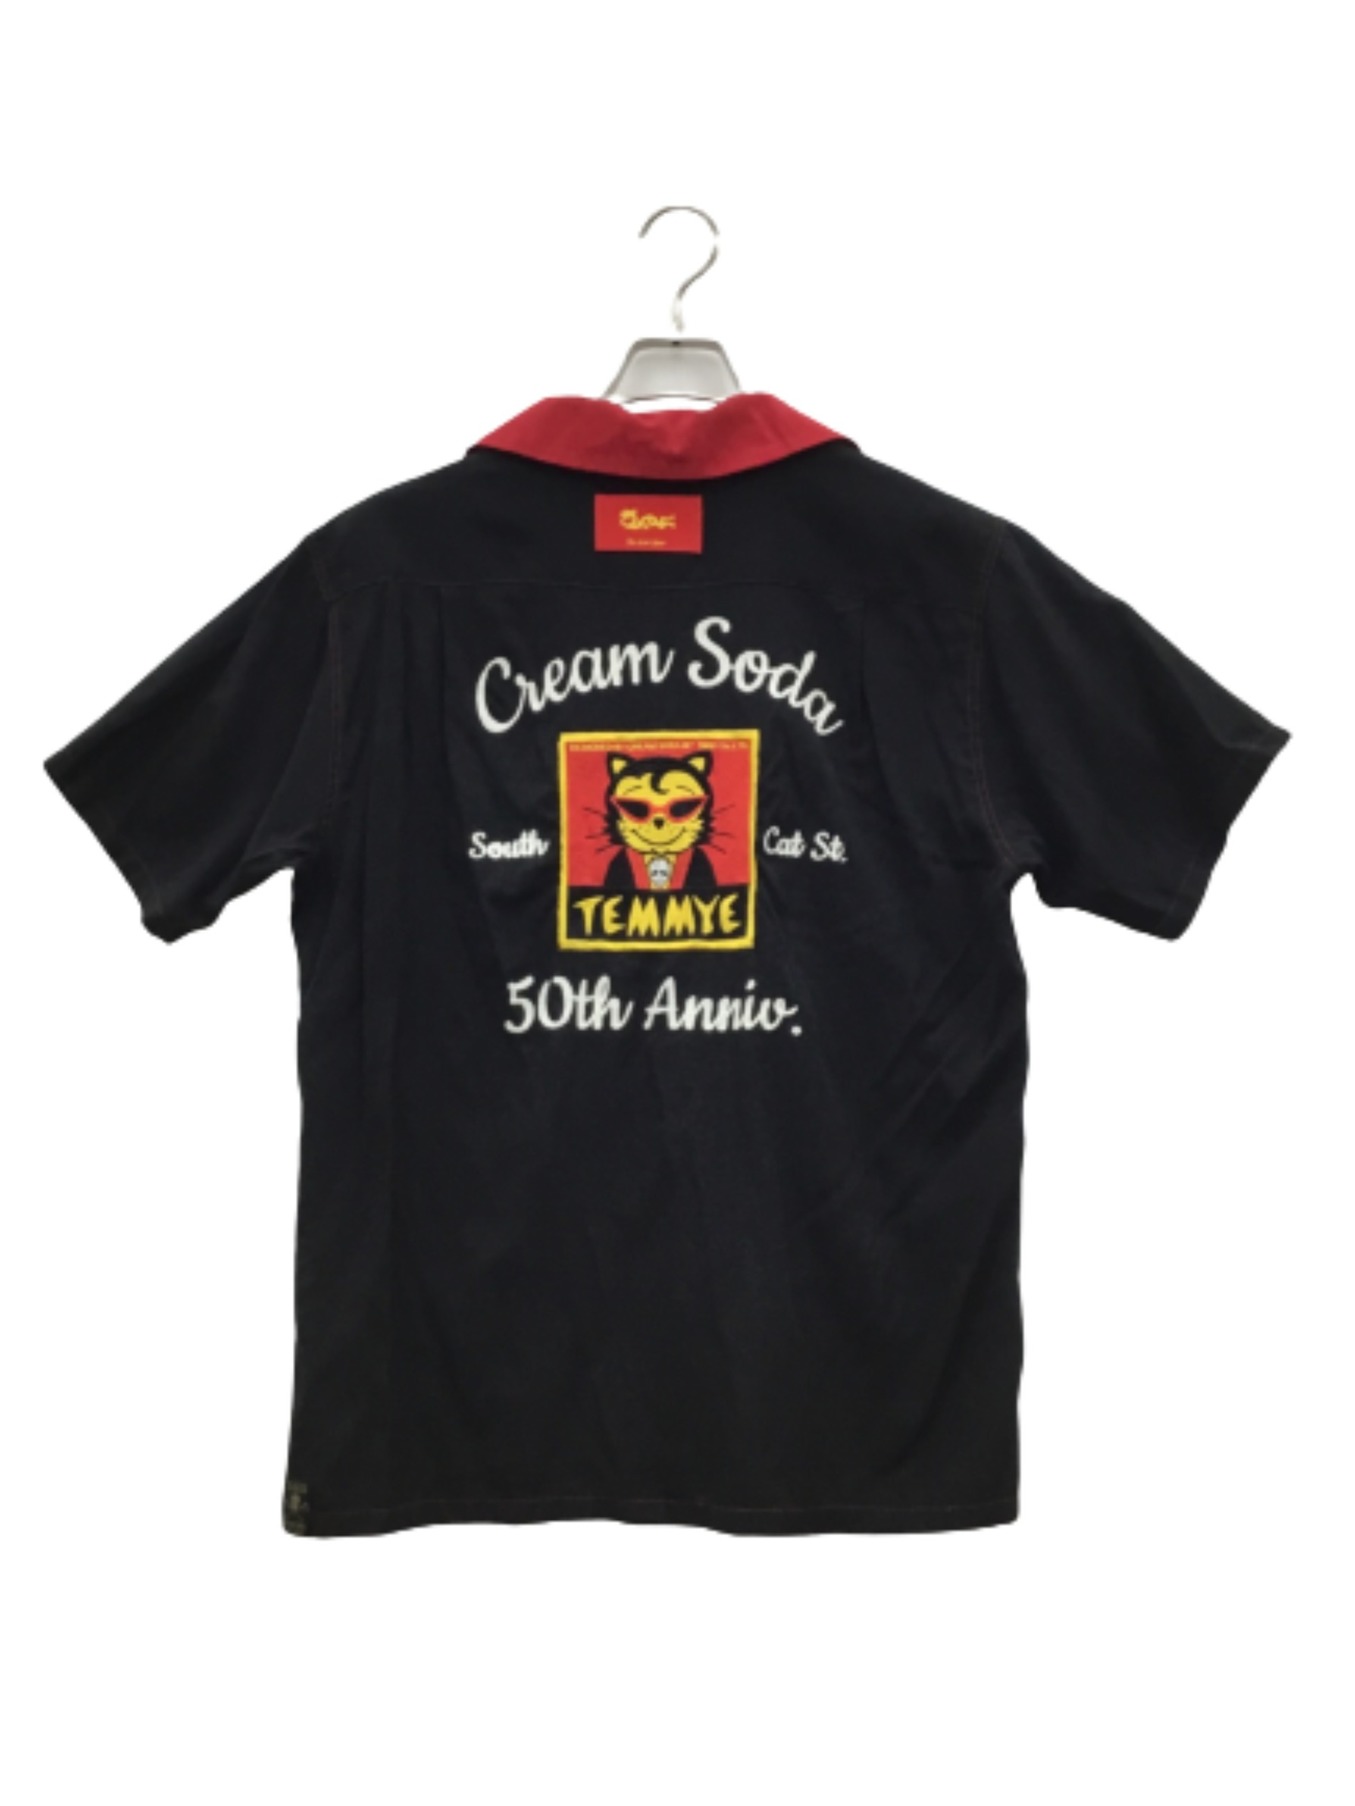 CREAM SODA (クリームソーダ) 50th Anniversary ティミー刺繍シャツ レッド×ブラック サイズ:L